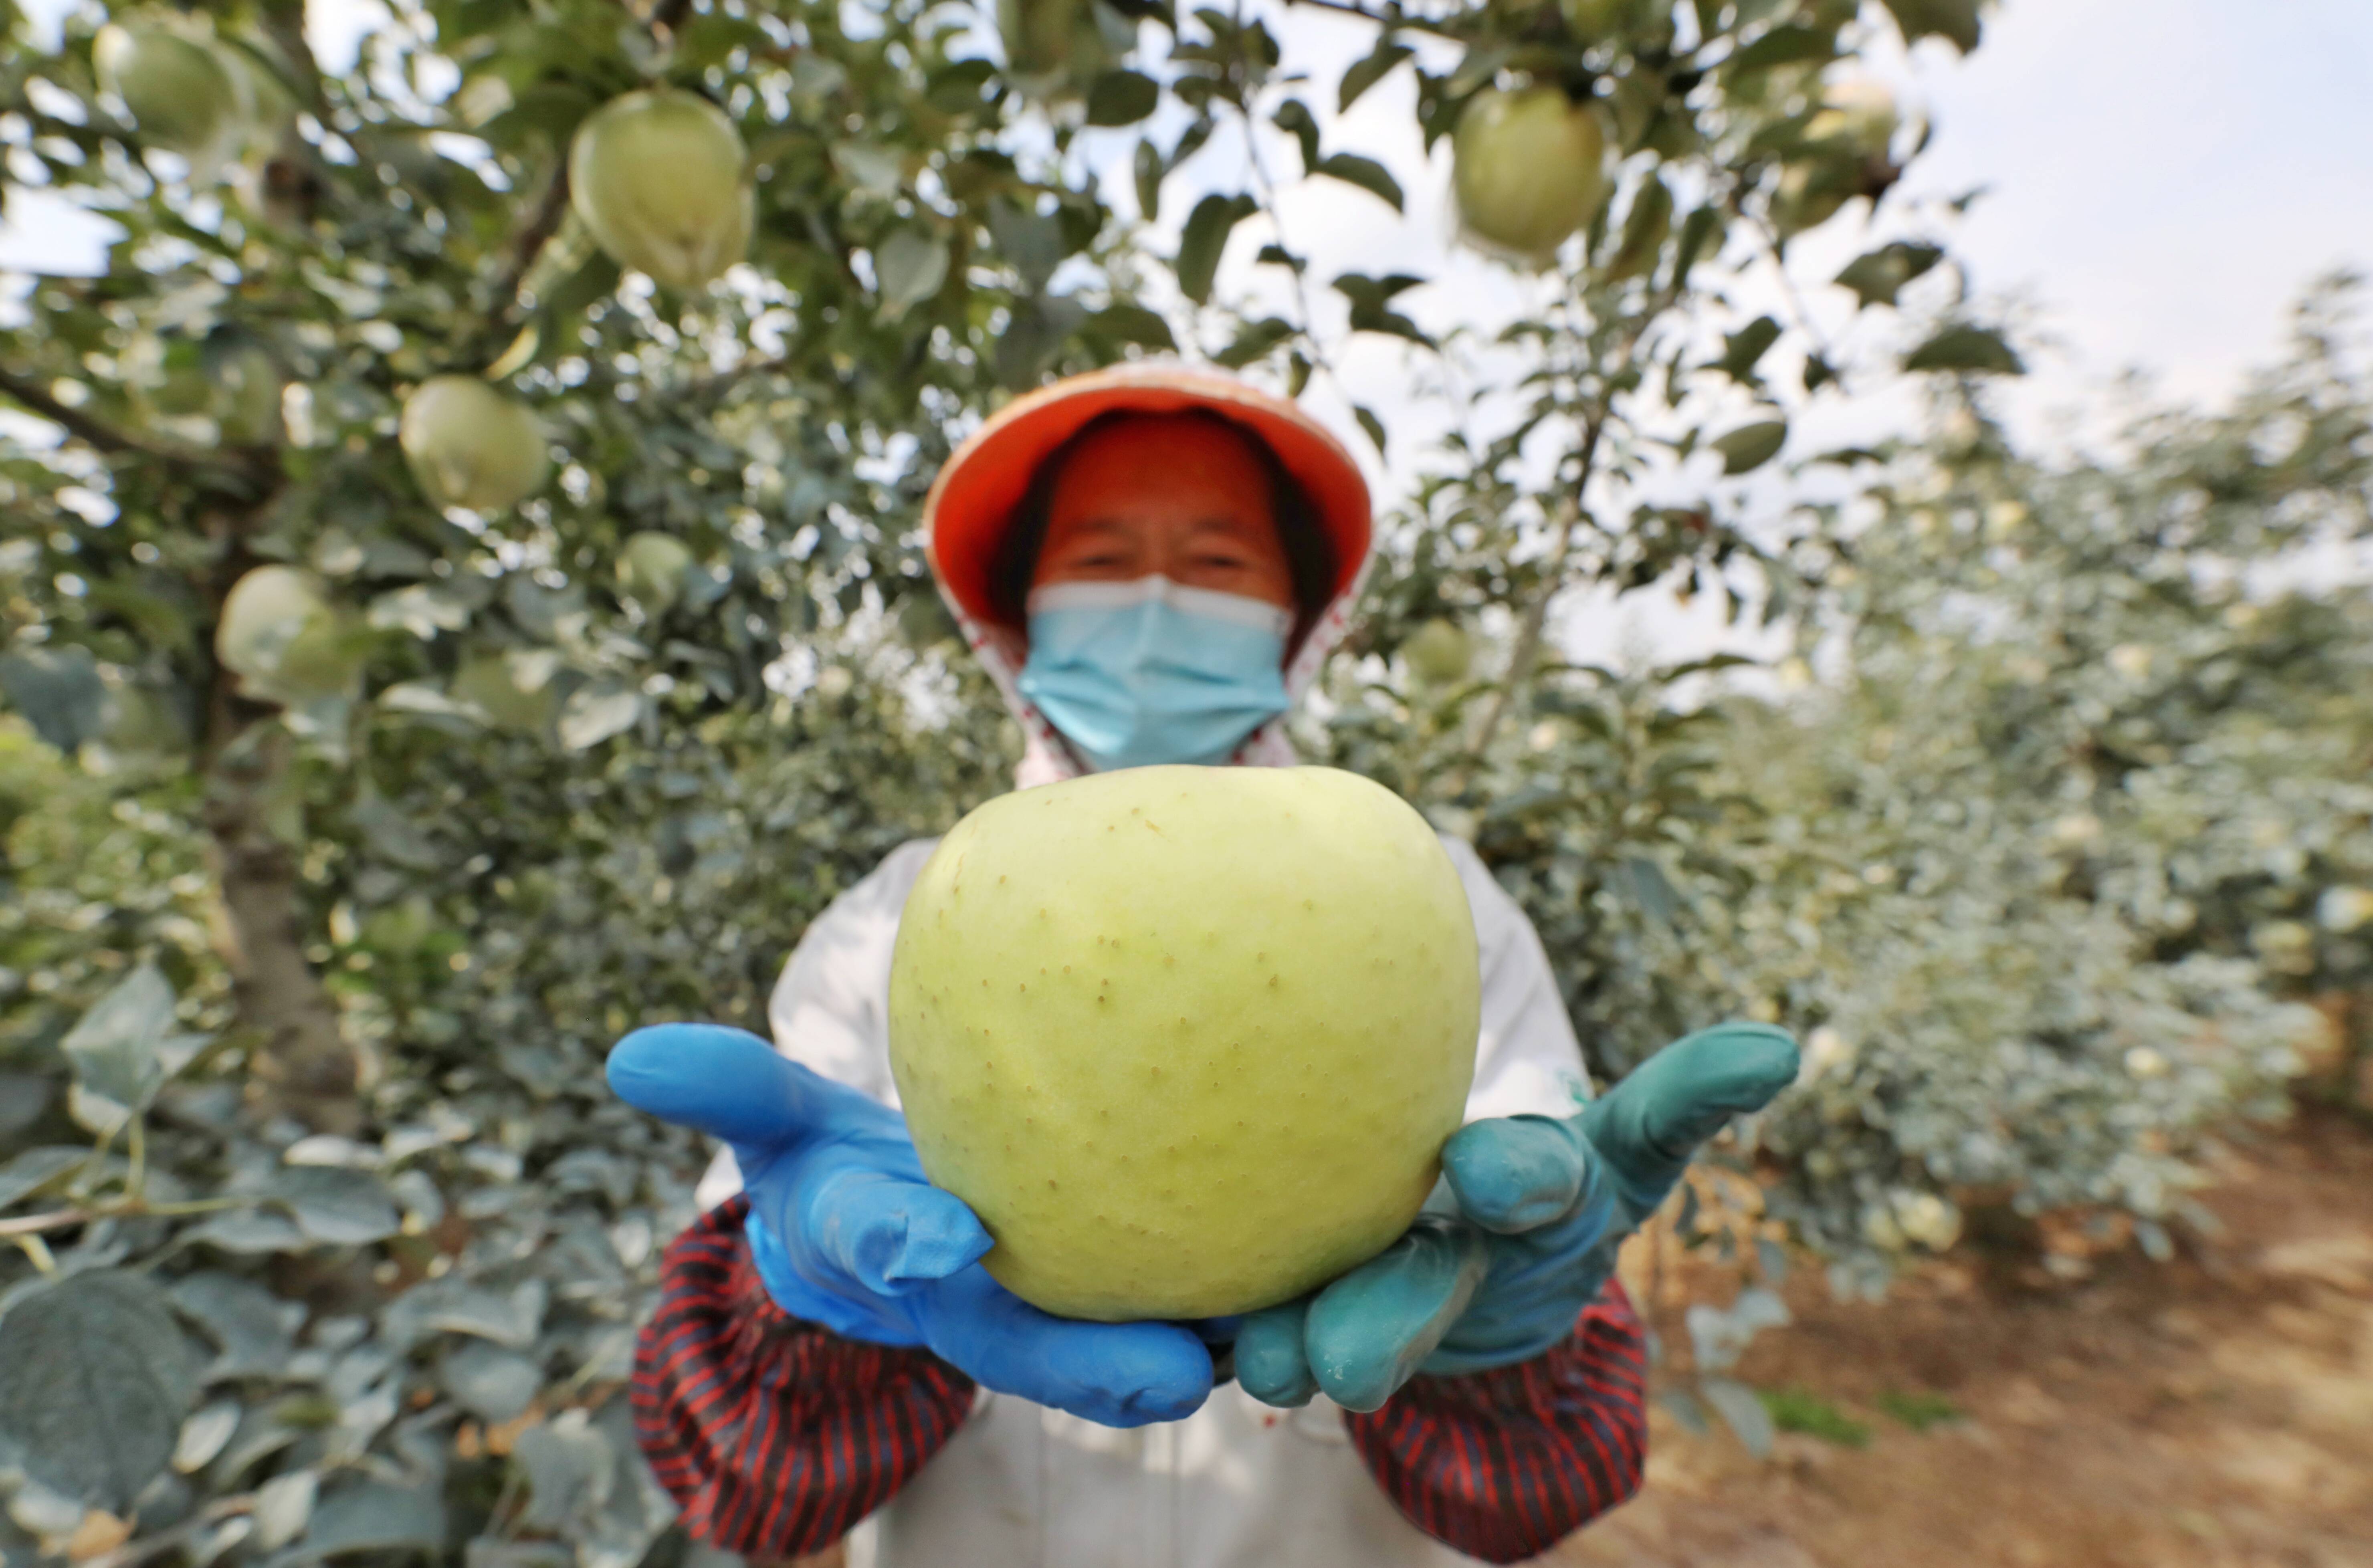 Baoshan apple from Qingdao perfumes air in Chengdu